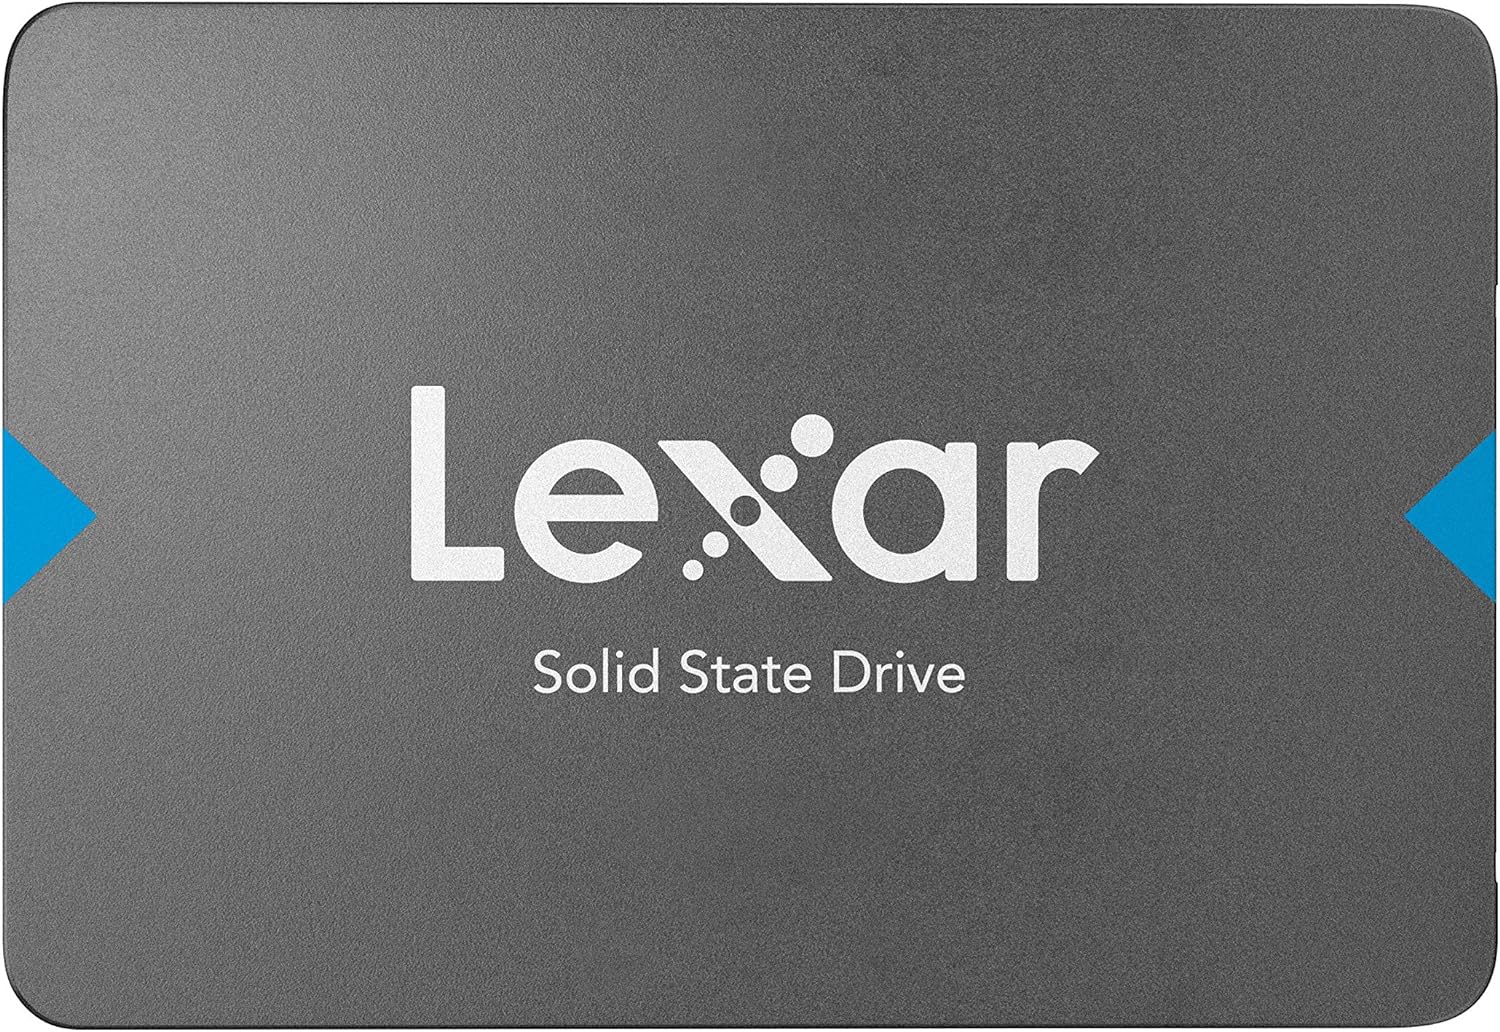 480GB Lexar NQ100 2.5" SATA (6Gb/s) Solid State Driv, Upto 550Mb/s Read and 445 Mb/s Write